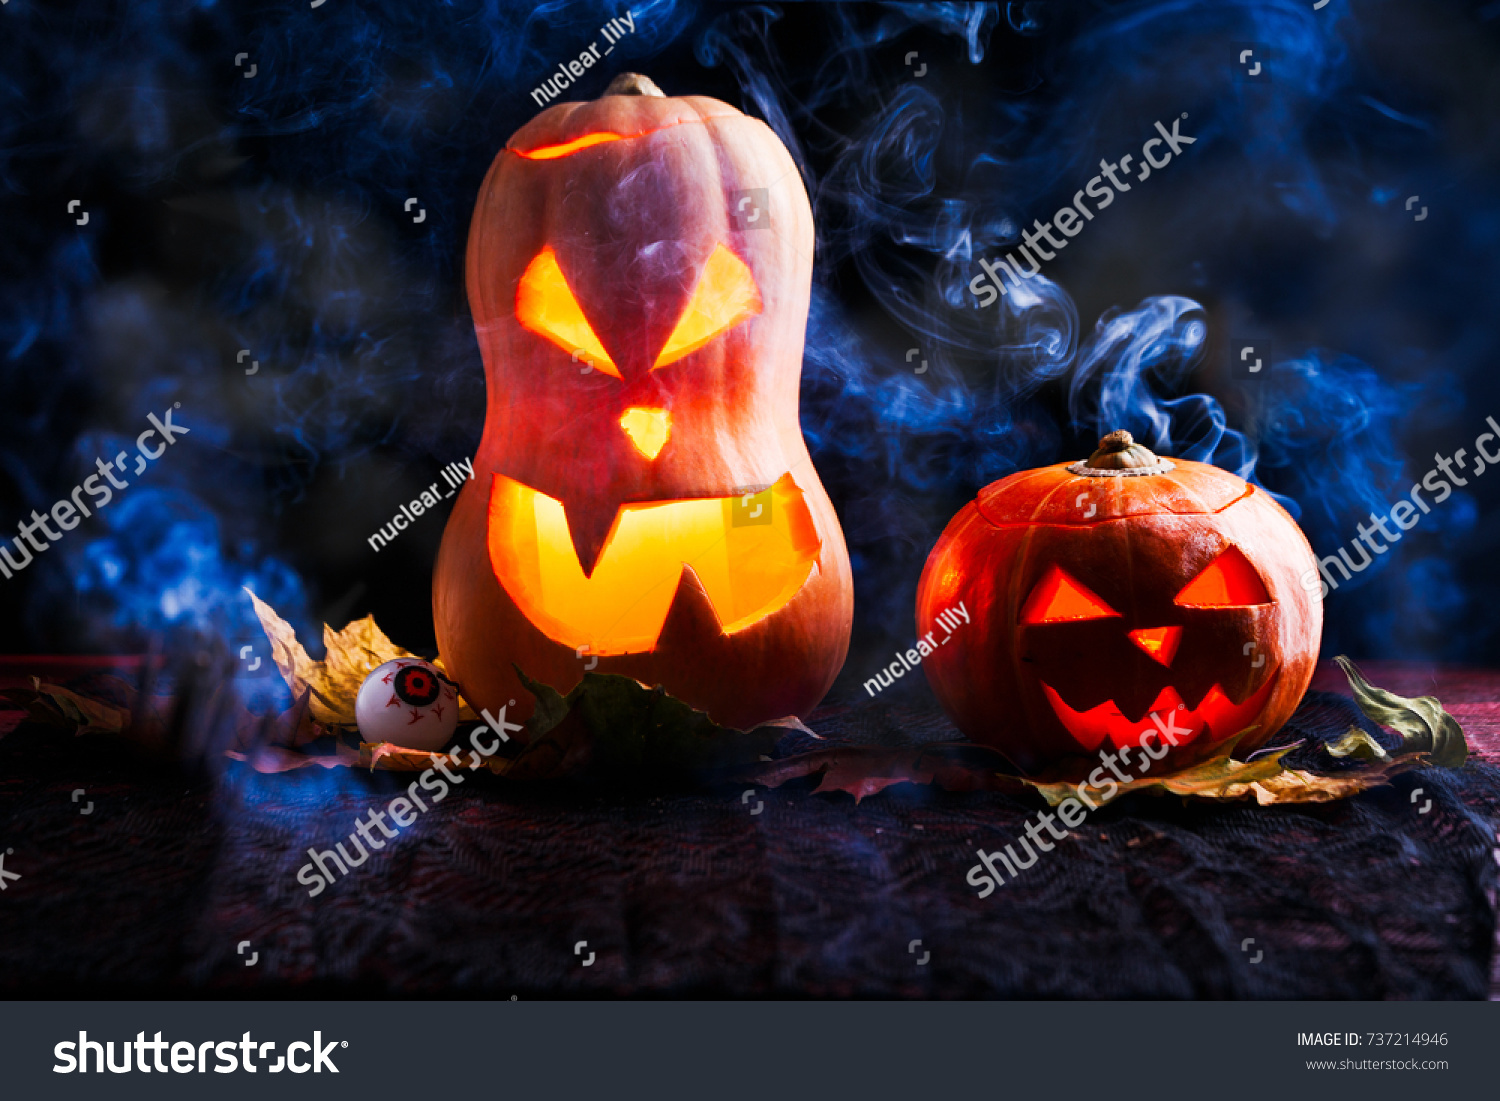 Image of two halloween pumpkins with eyeballs on black background with smoke #737214946